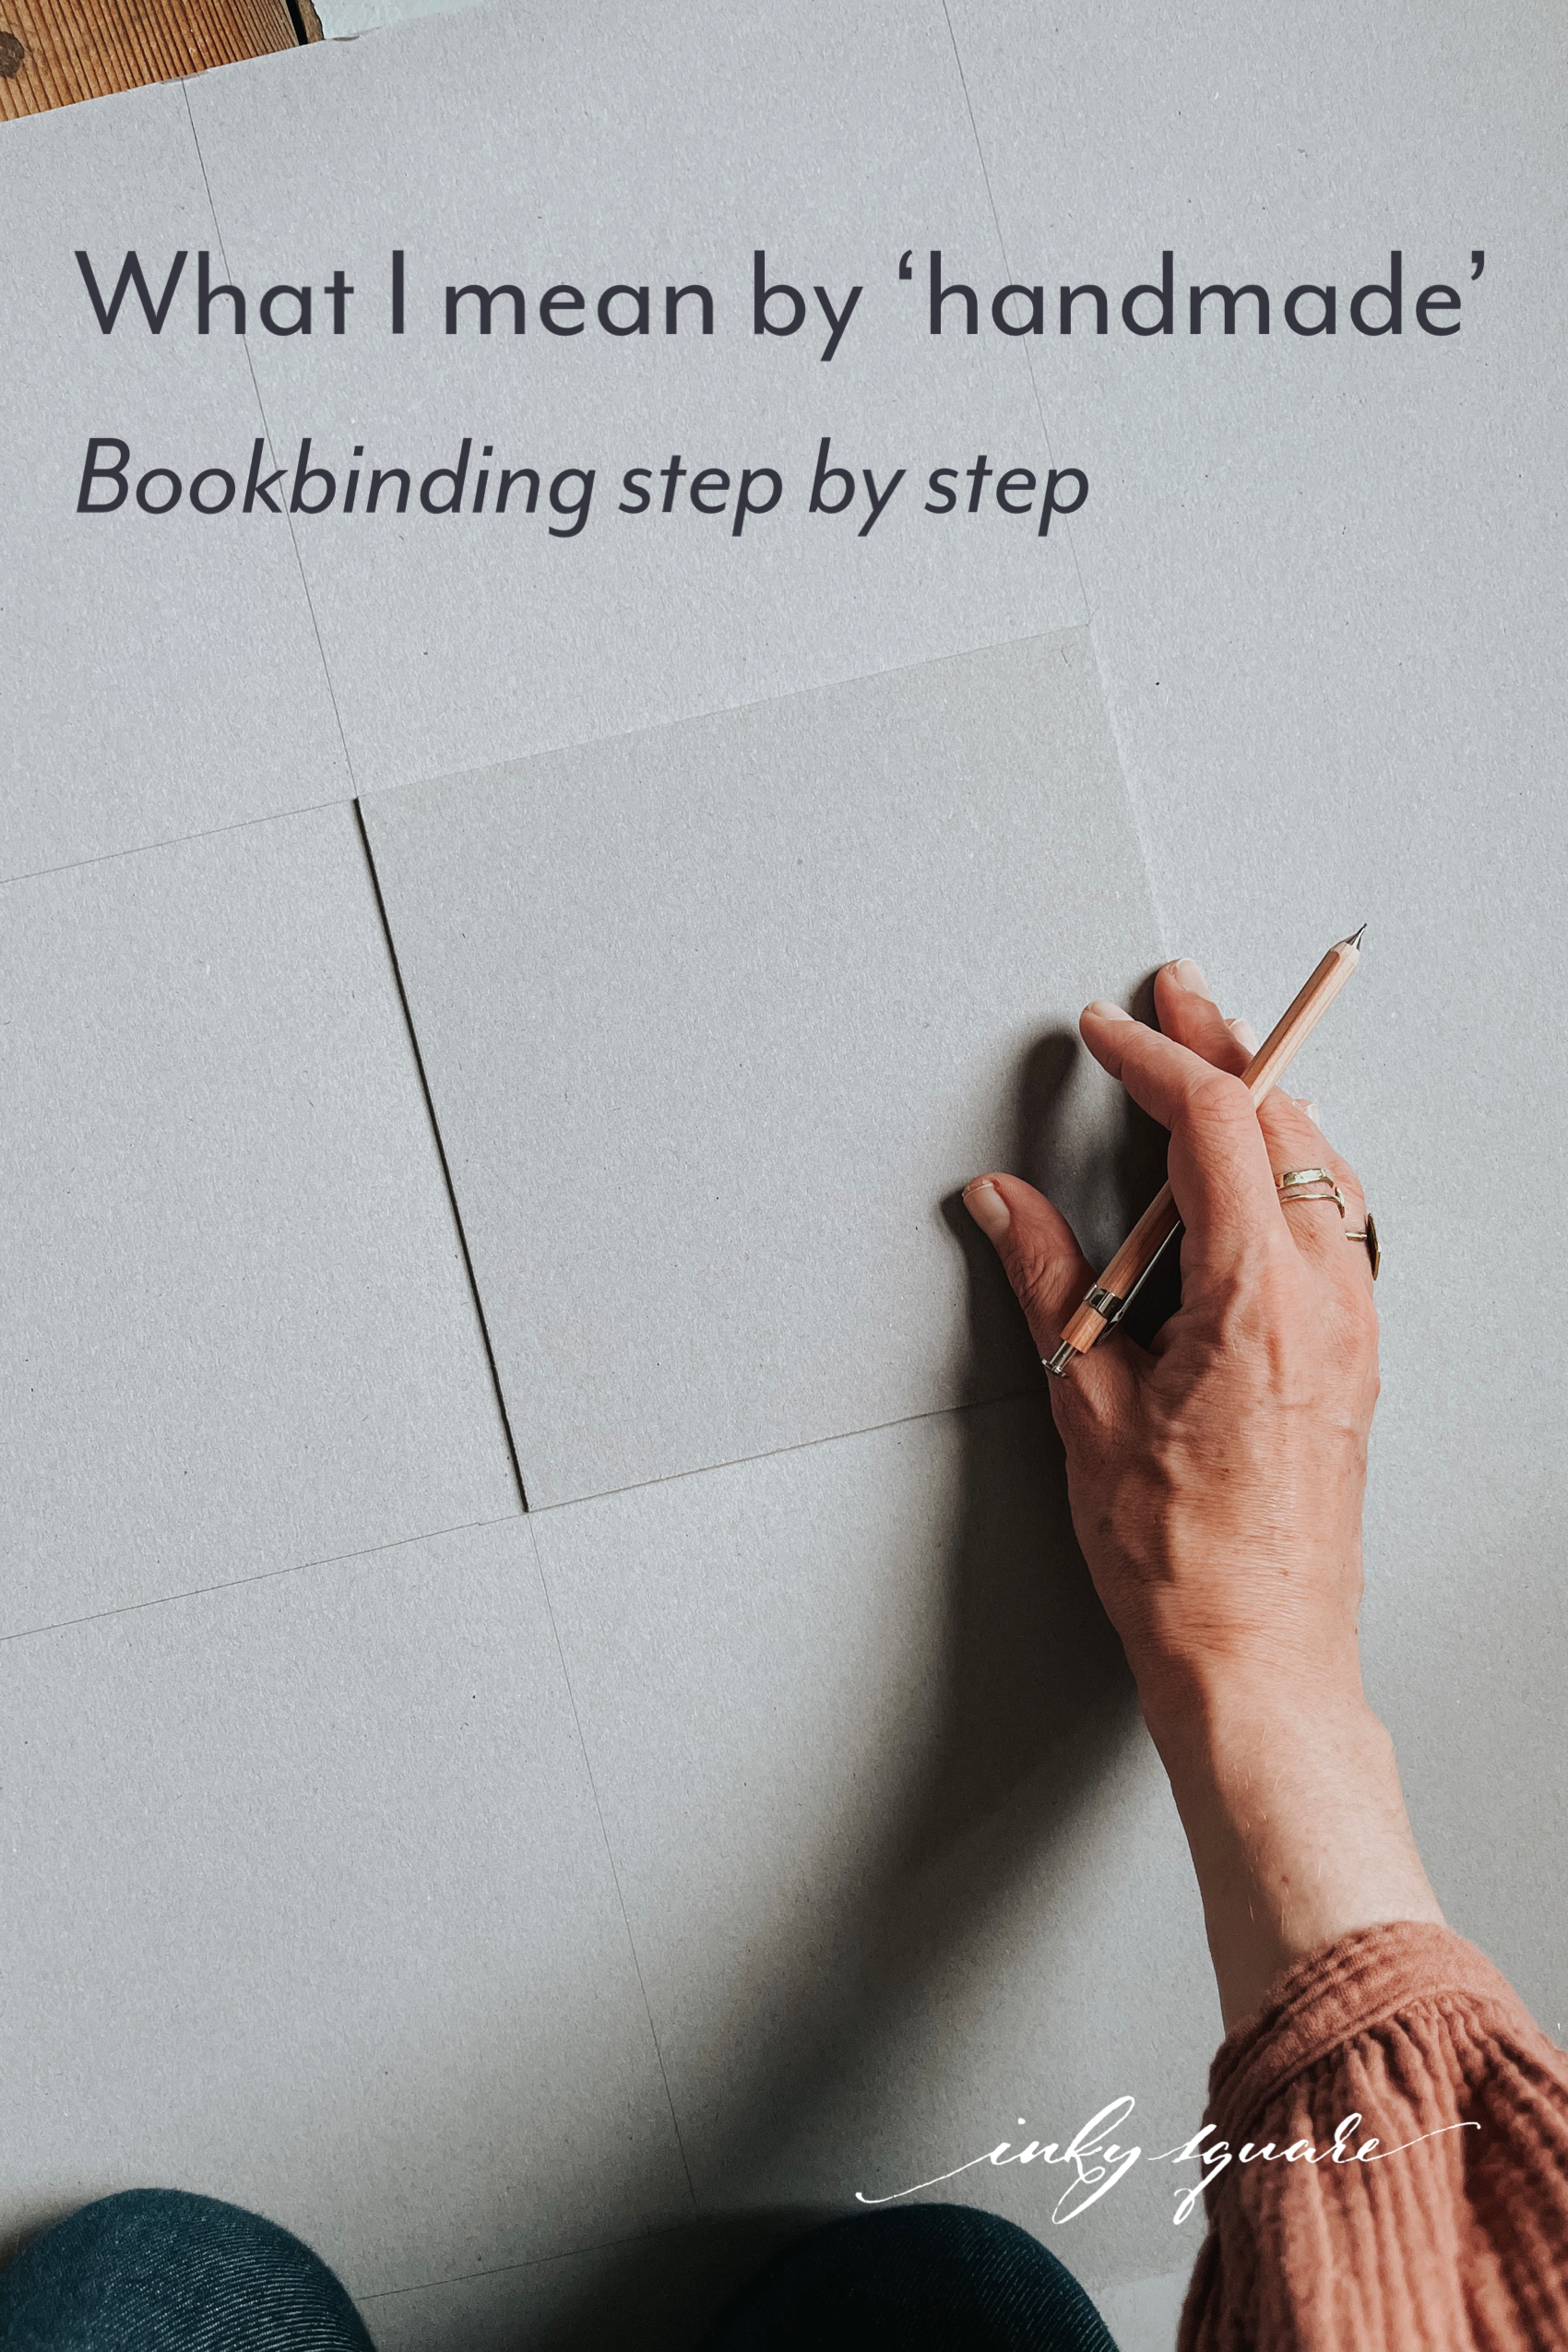 BookBinding: Making A Travel Notebook